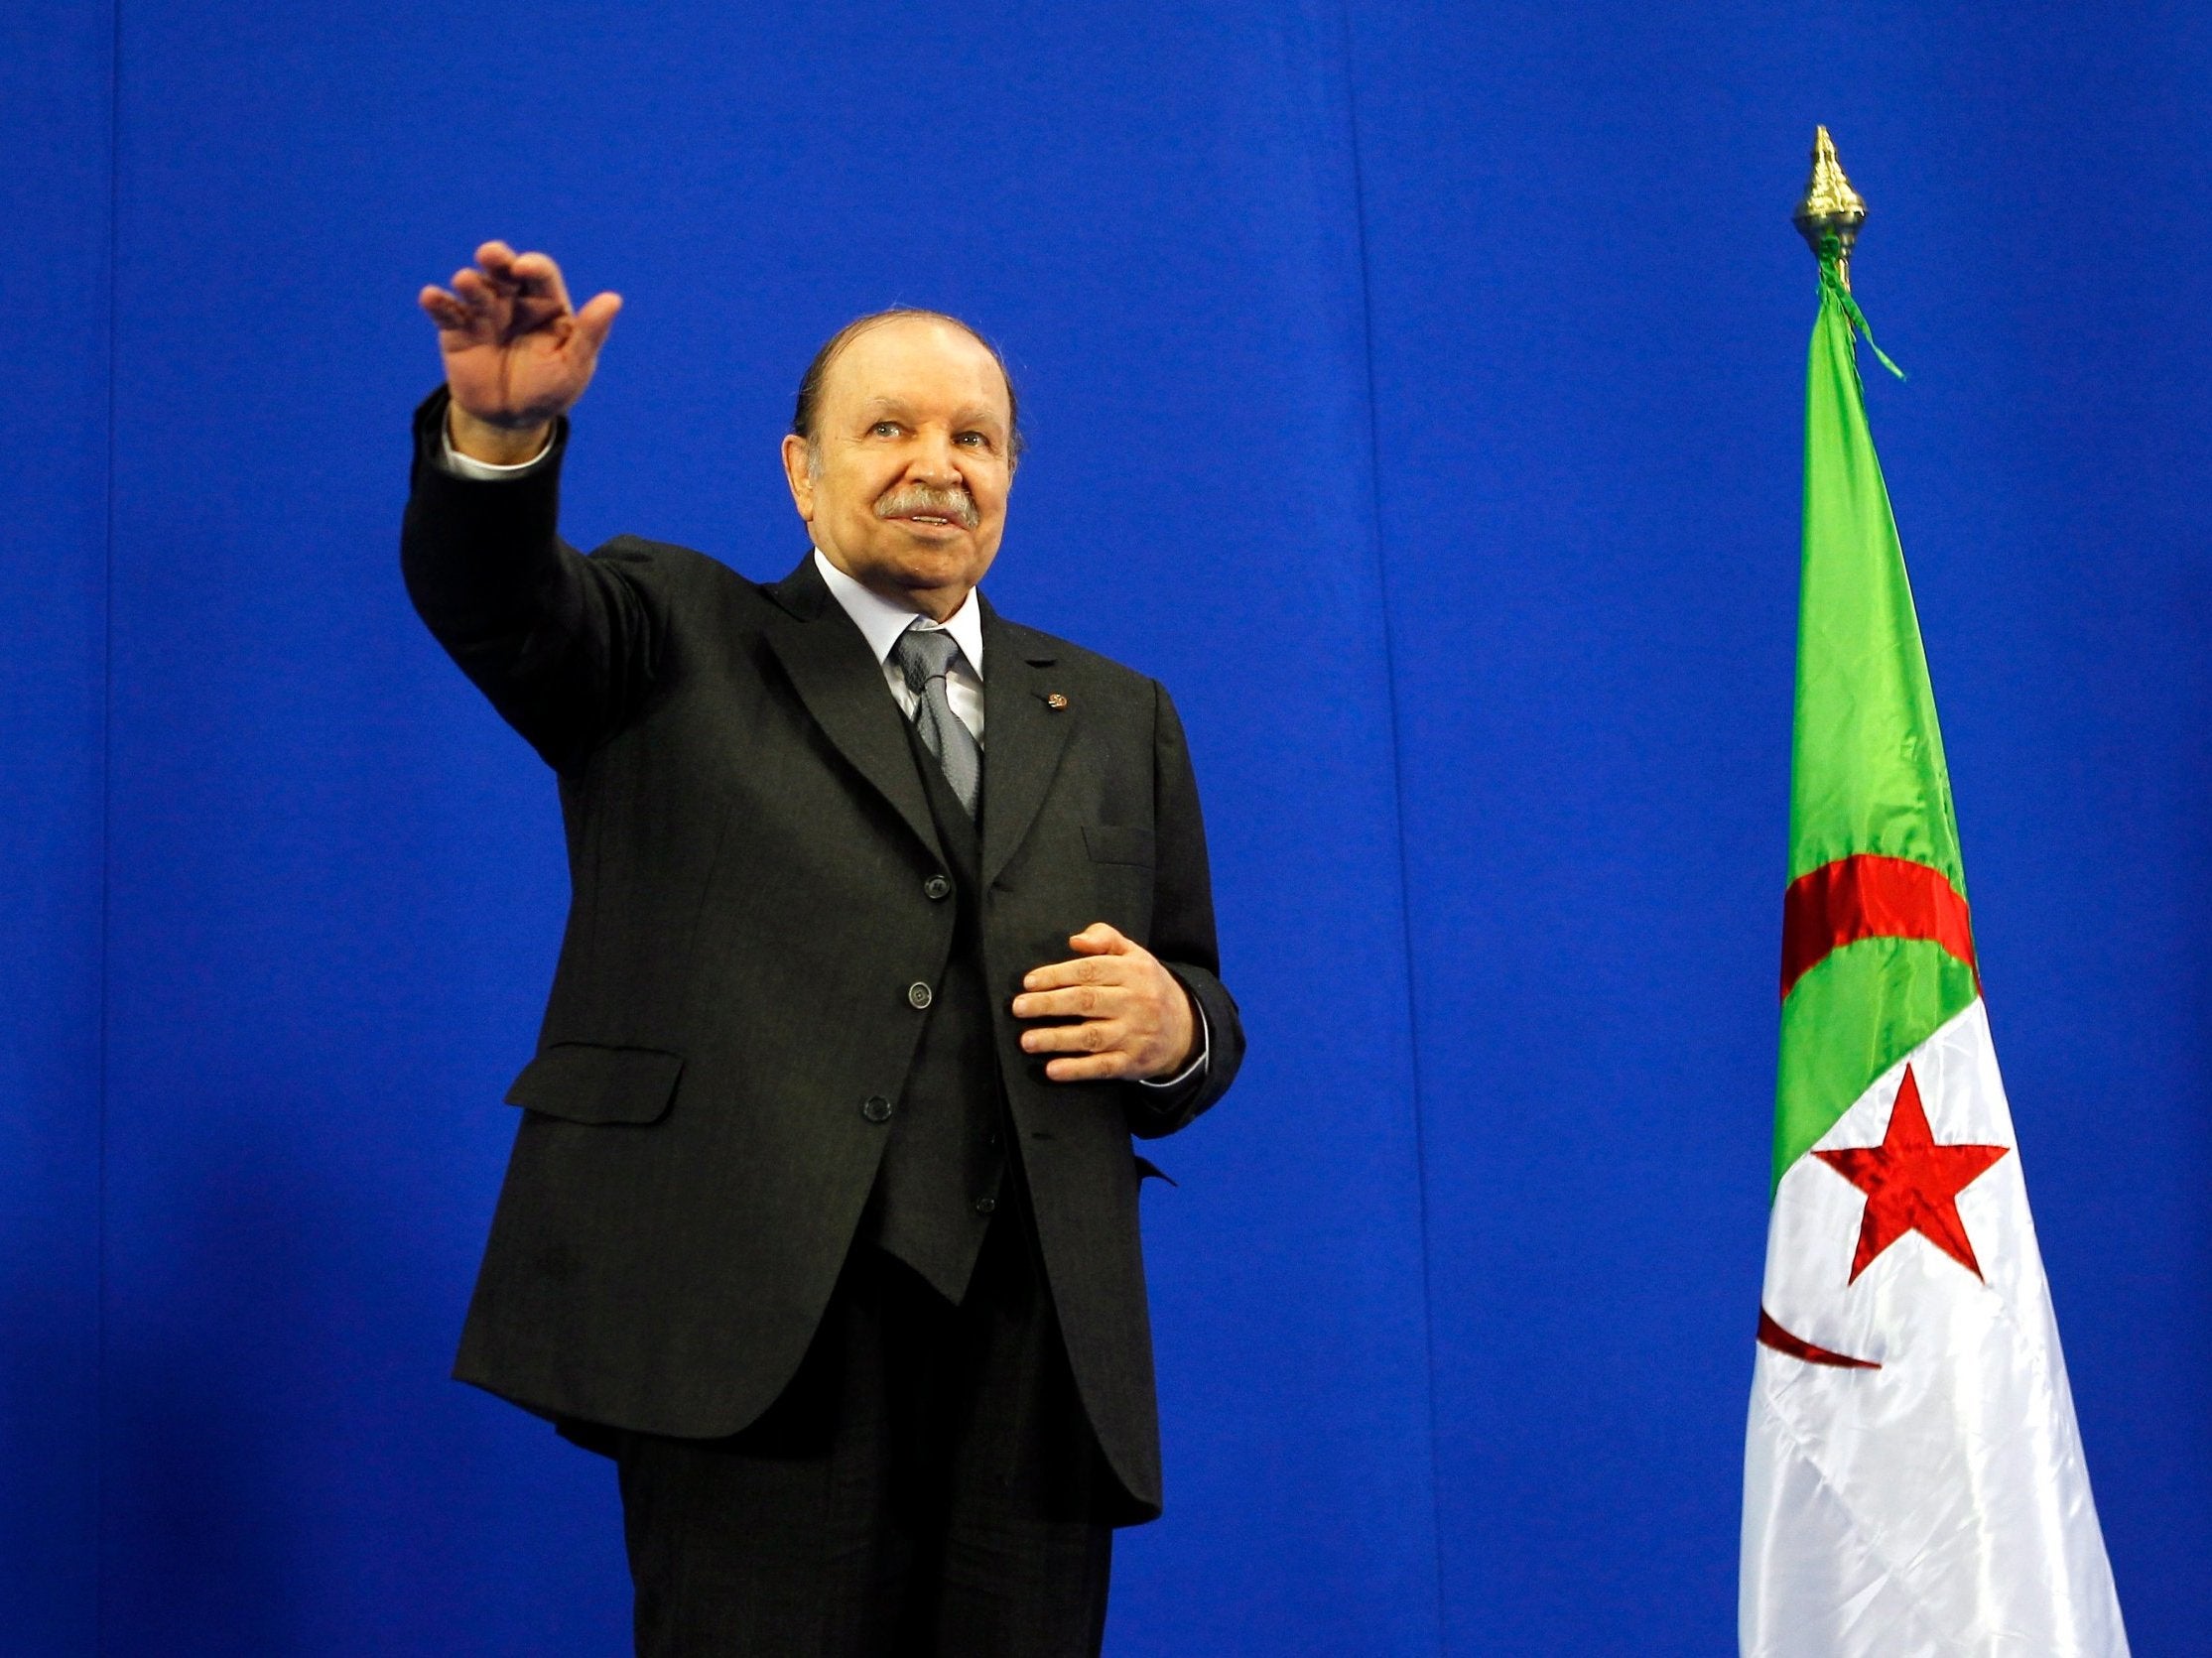 Abdelaziz Bouteflika has resigned as Algeria's president, according to state news